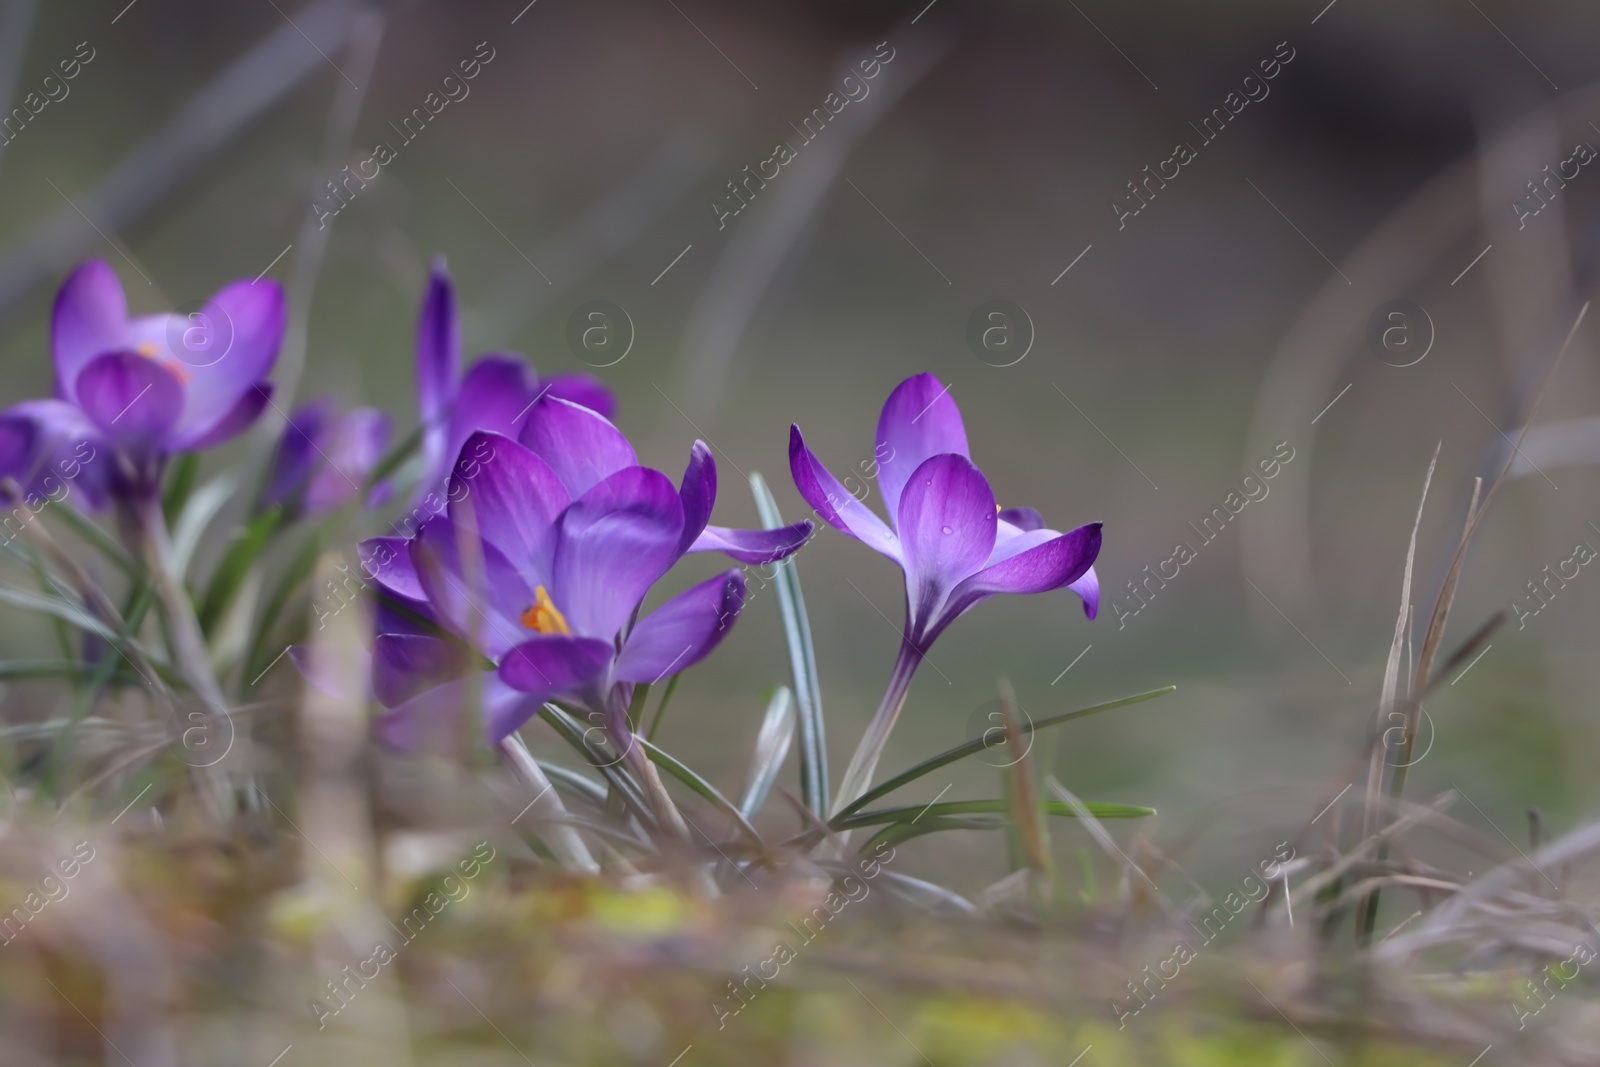 Photo of Fresh purple crocus flowers growing on blurred background